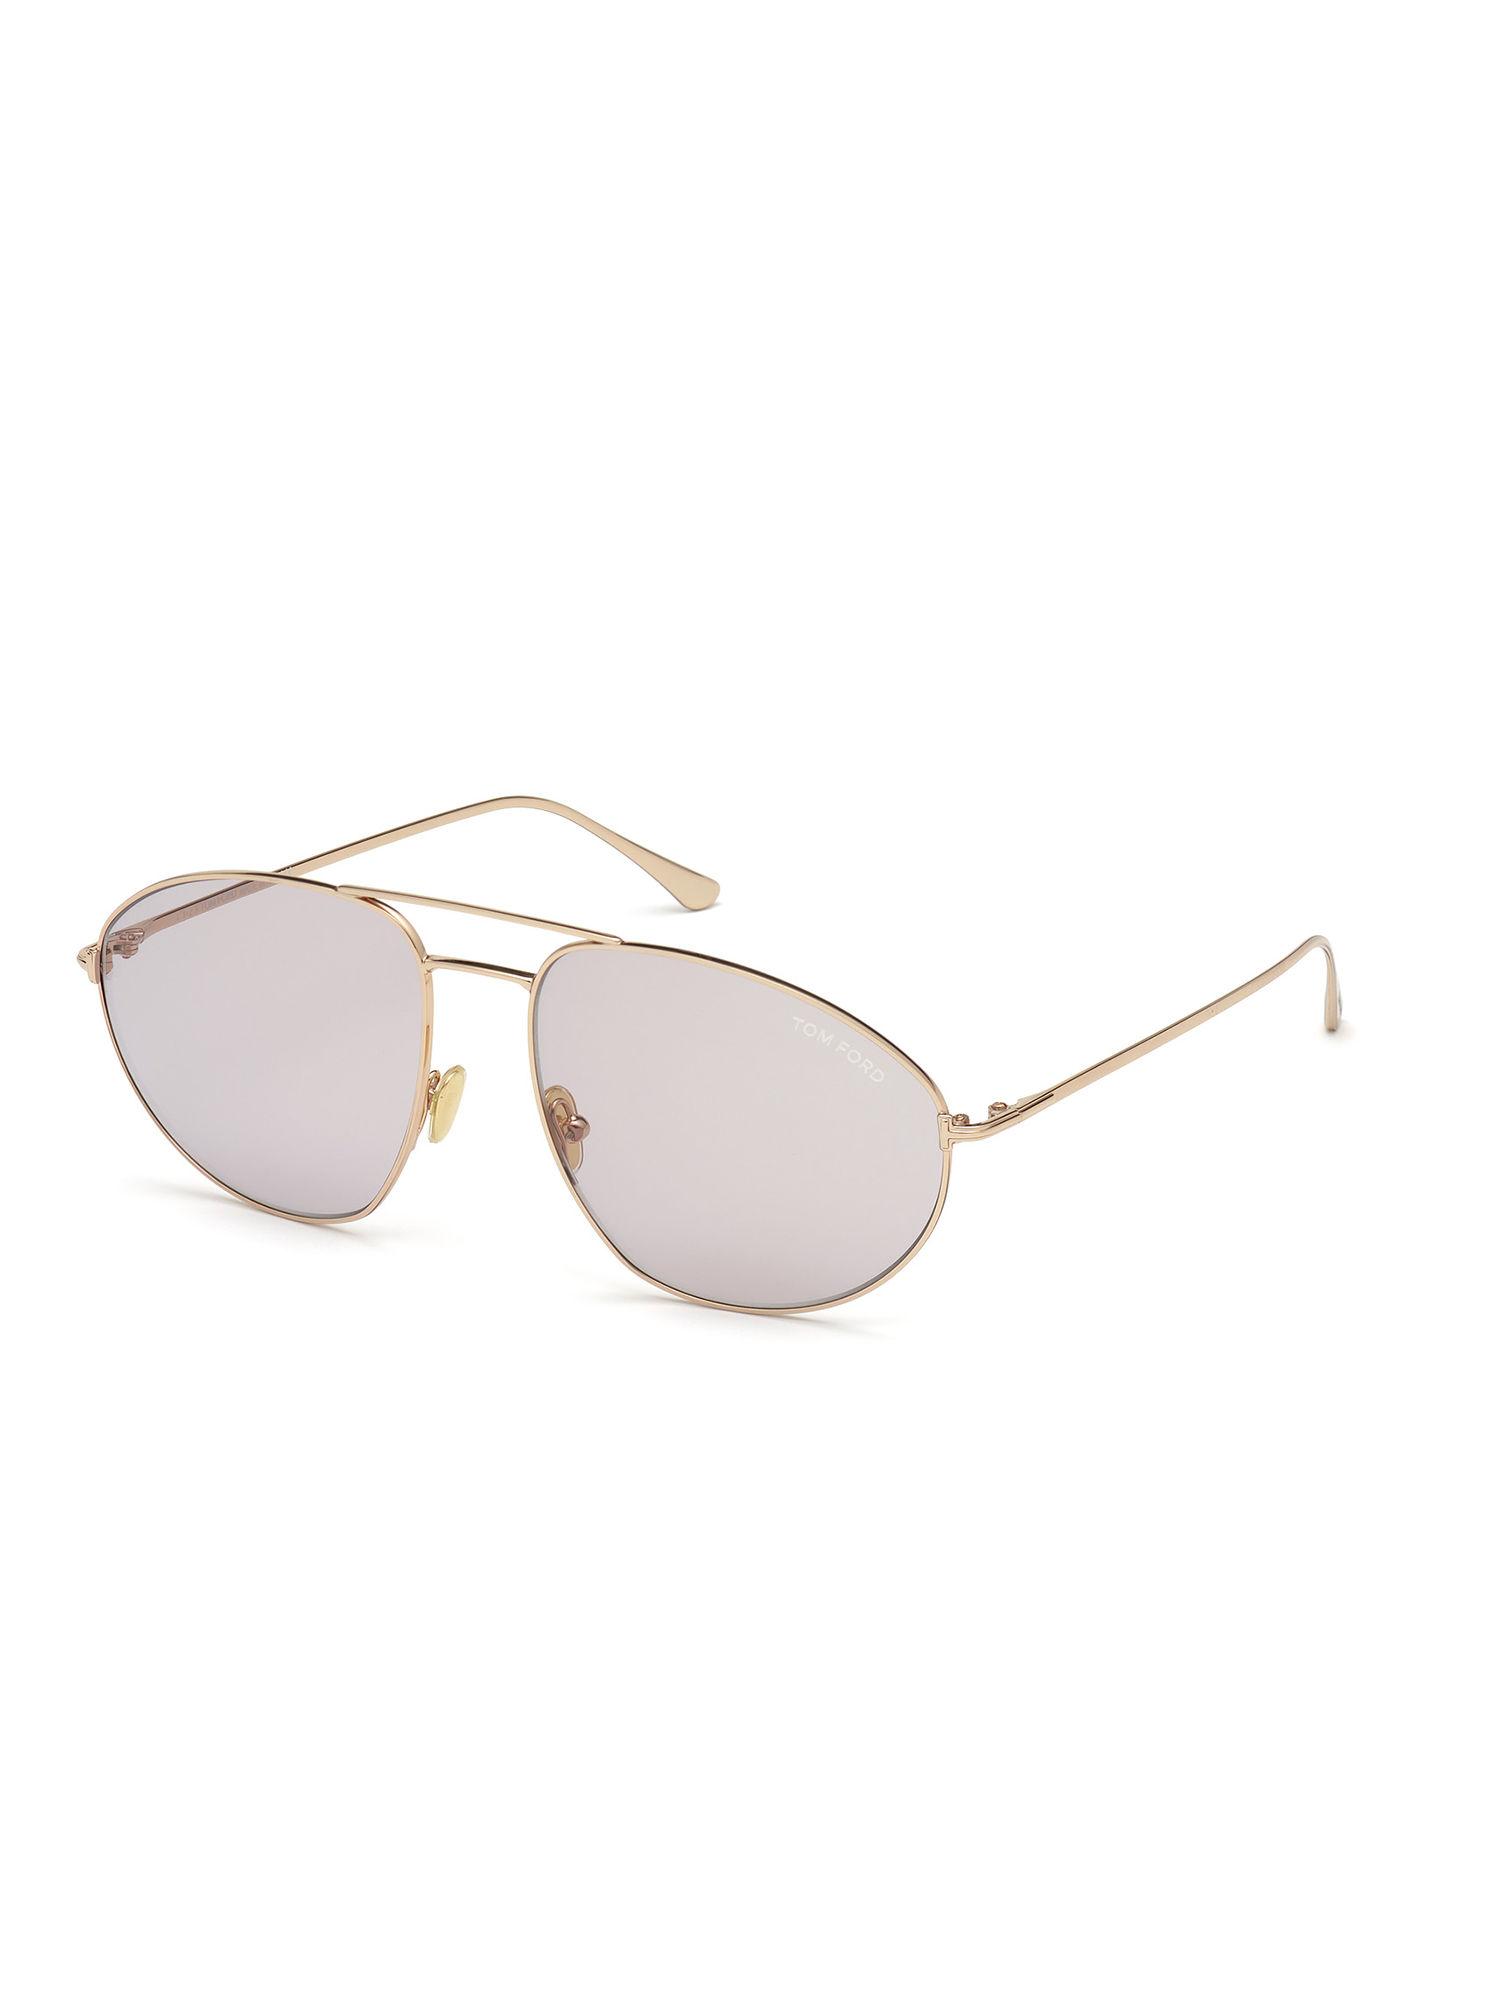 gold metal sunglasses ft0796 59 28a